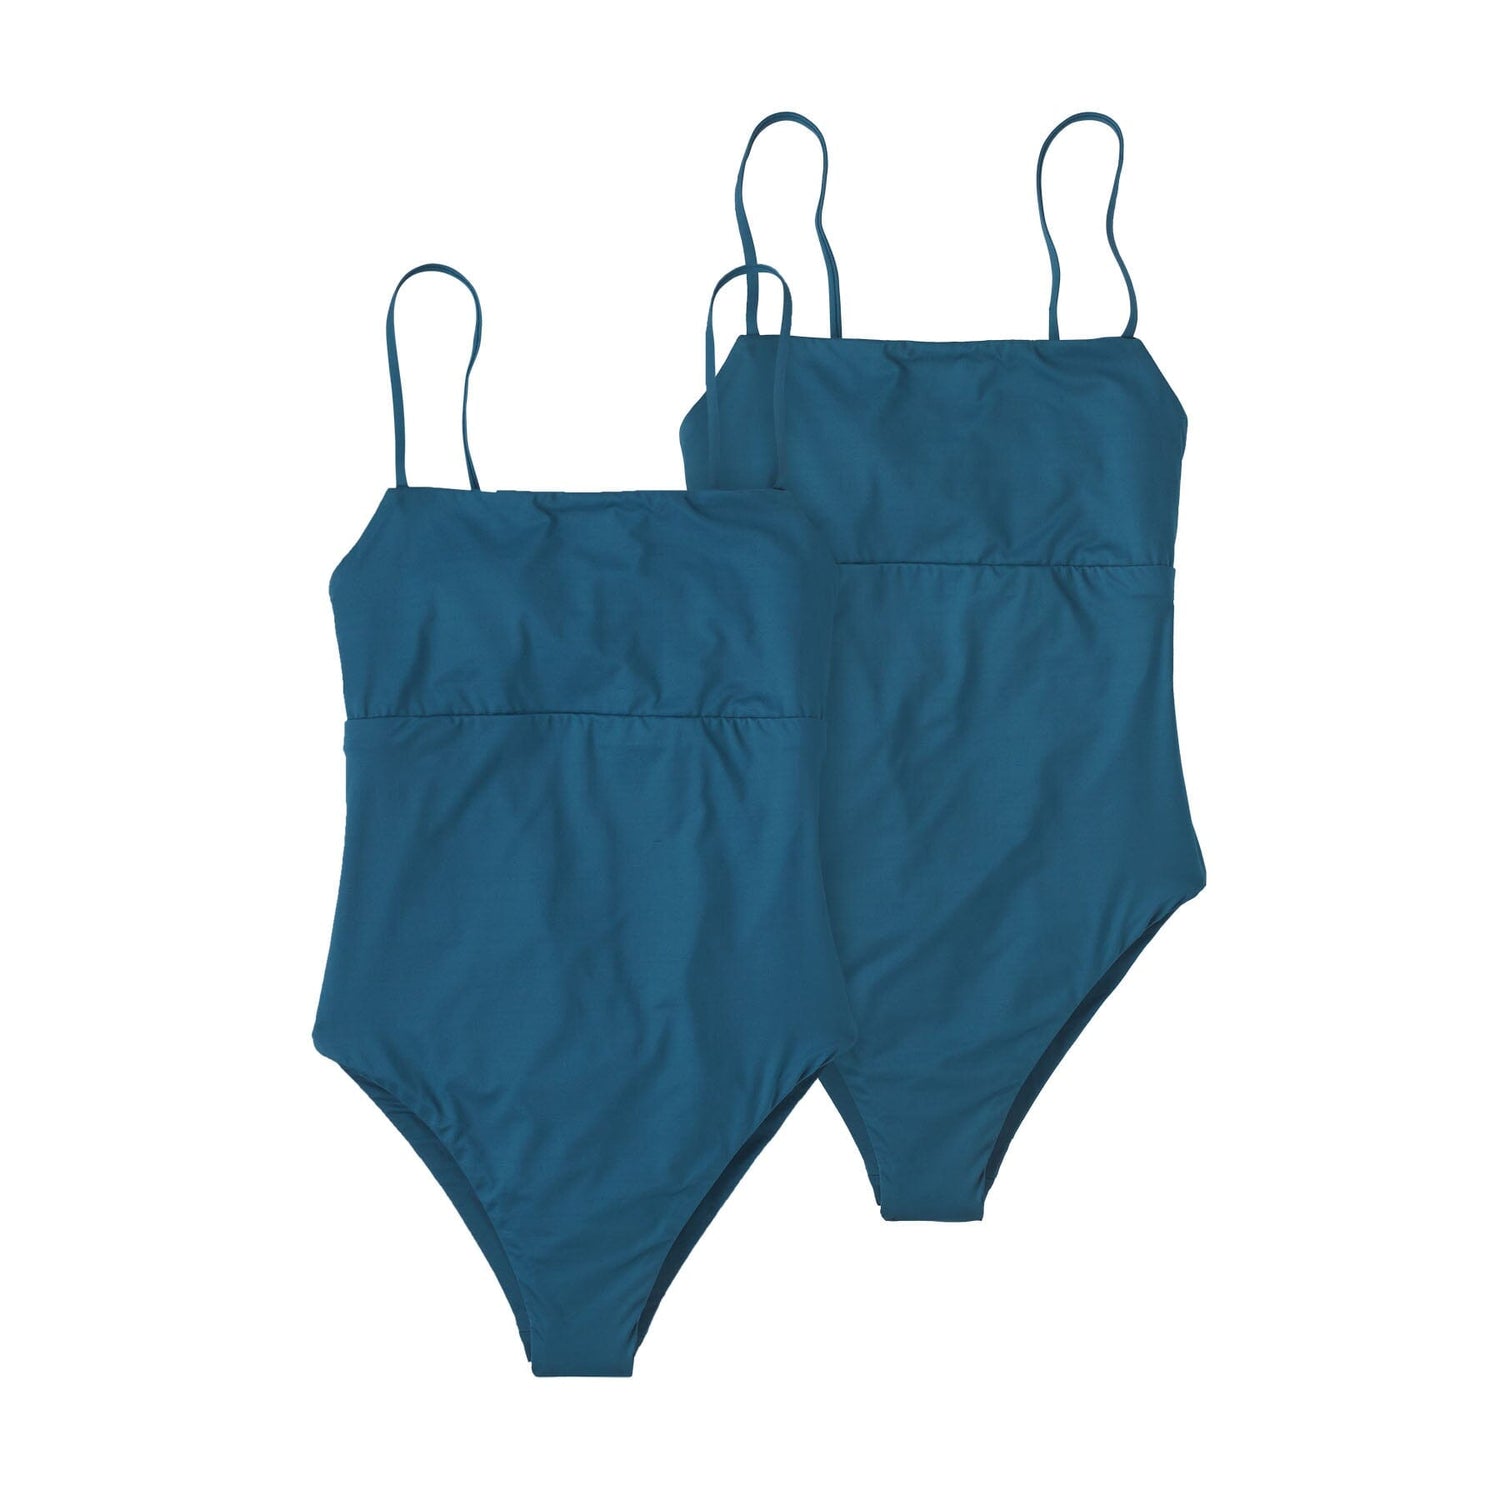 Patagonia W's Reversible Sunrise Slider Swimsuit - Recycled Polyester Wavy Blue Swimwear